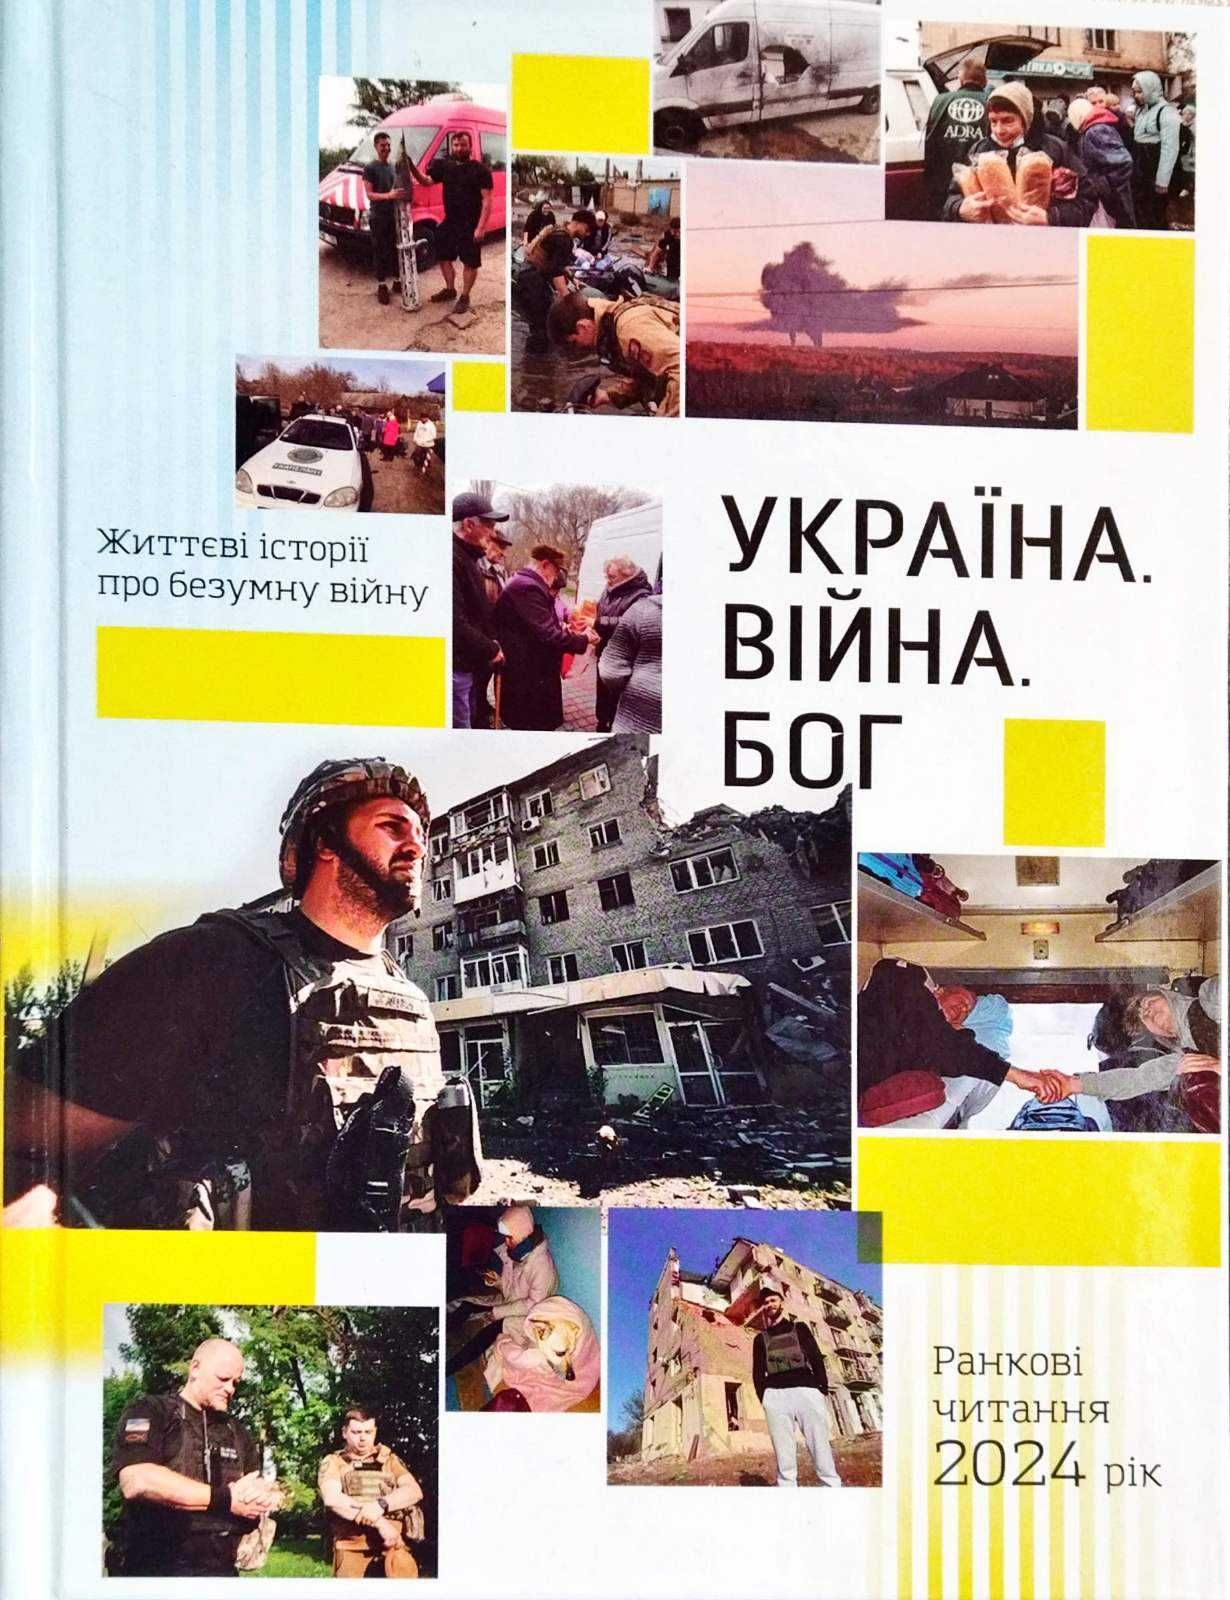 Продам Дуже цікаву книгу!!! Україна Війна Бог.